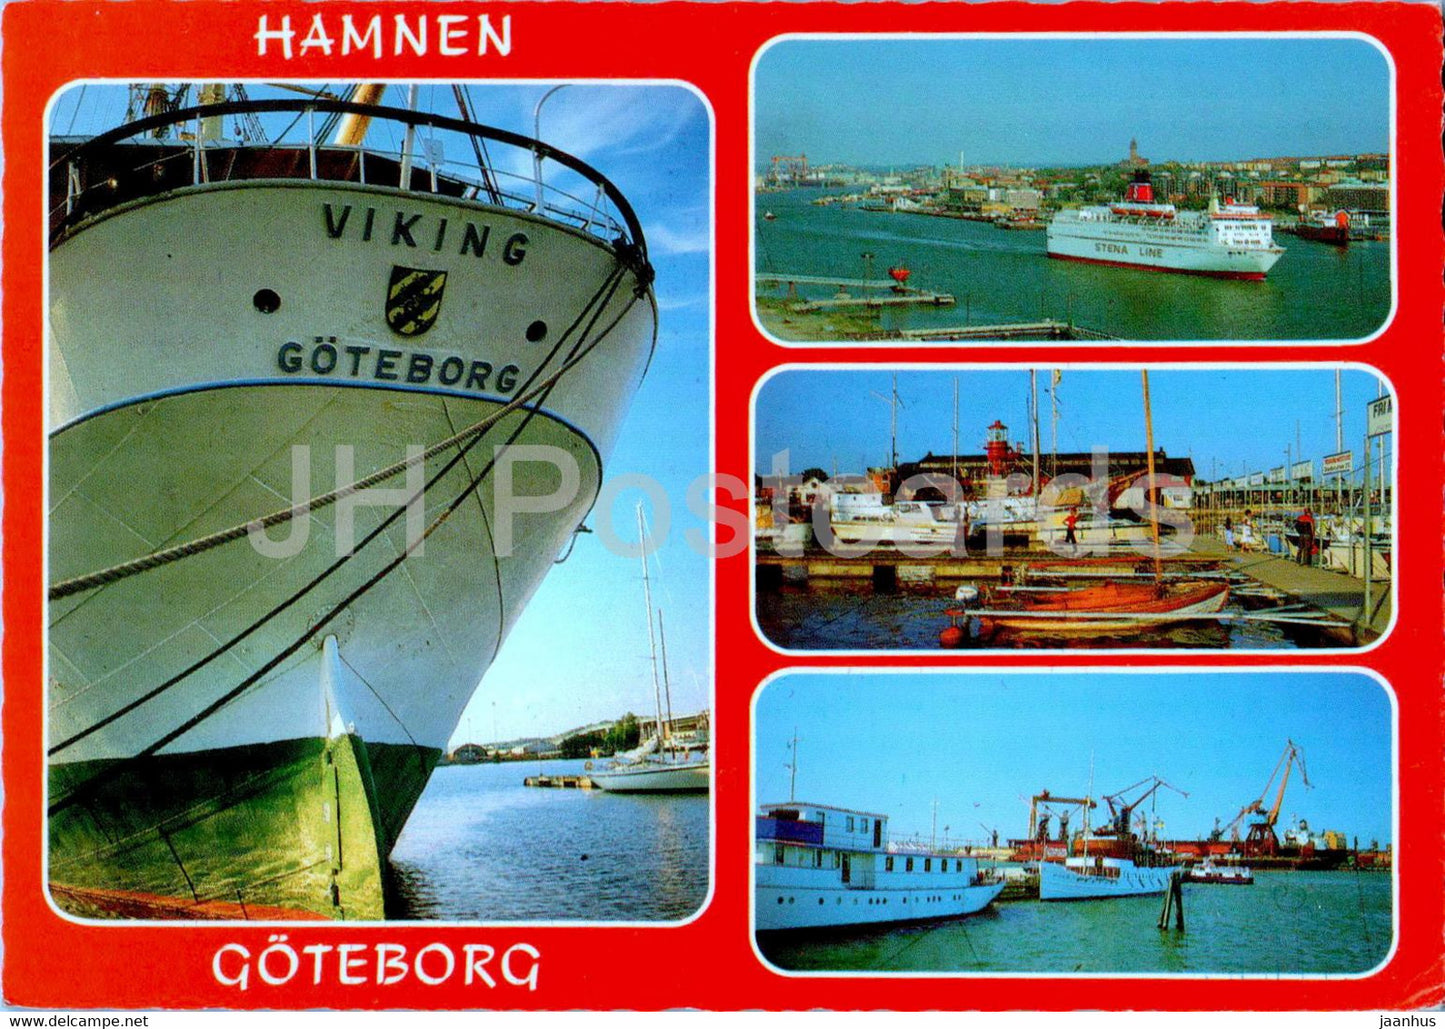 Goteborg - Hamnen - port - ship Viking - boat - multiview - 1989 - Sweden - used - JH Postcards